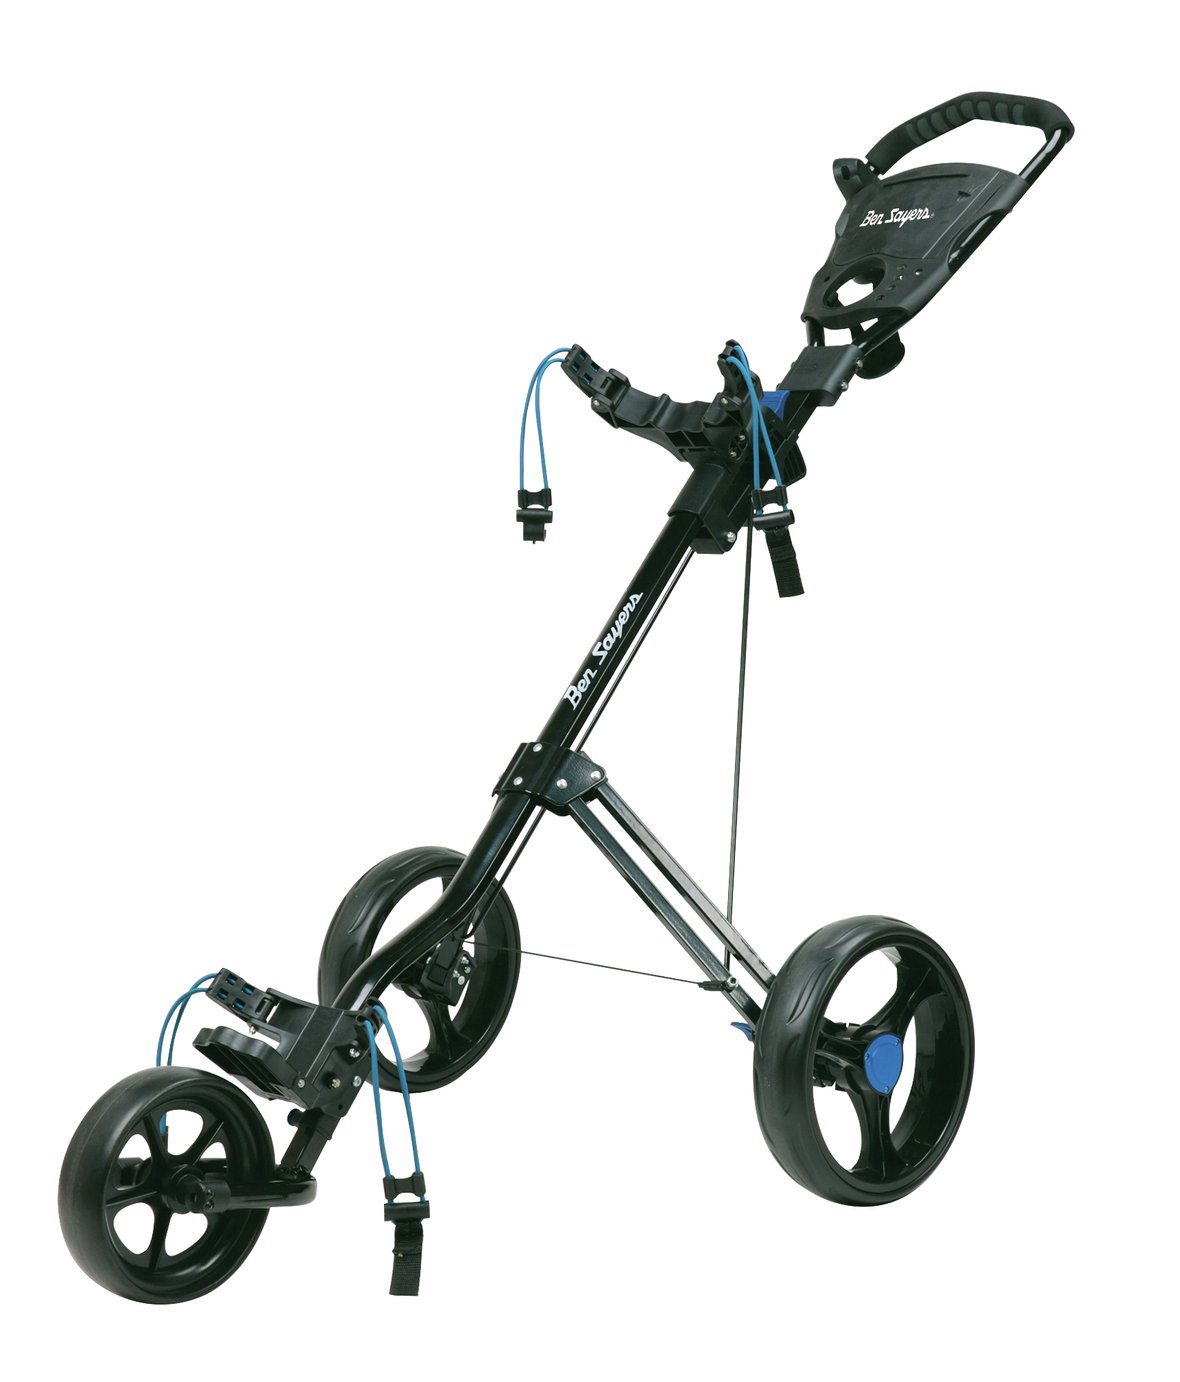 Ben Sayers D3 Push Golf Trolley